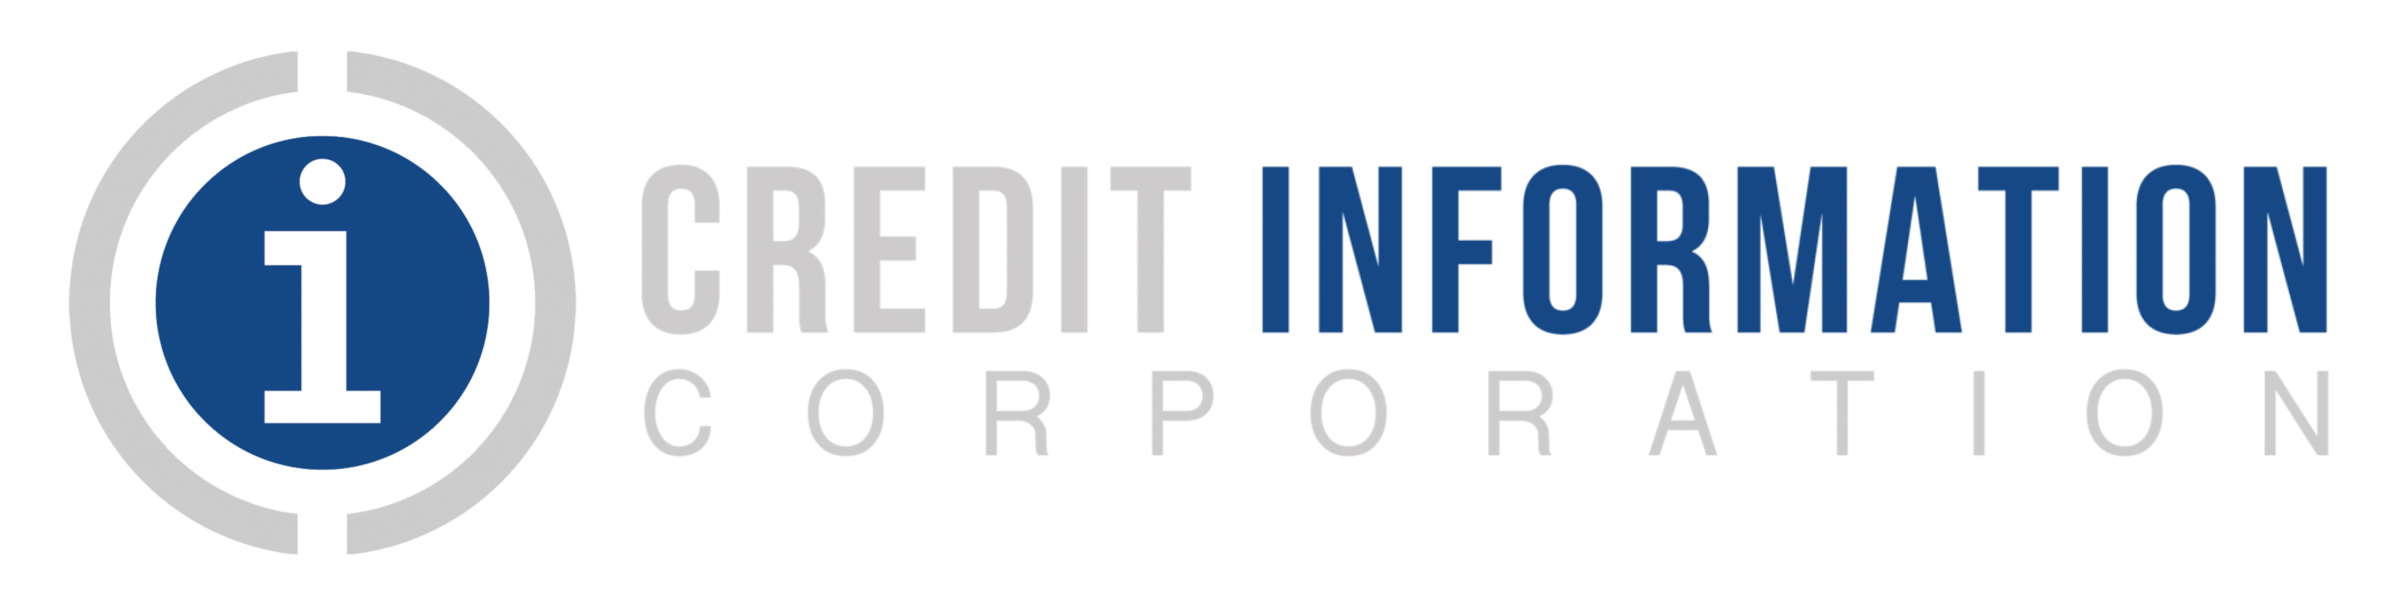 credit information corporation logo